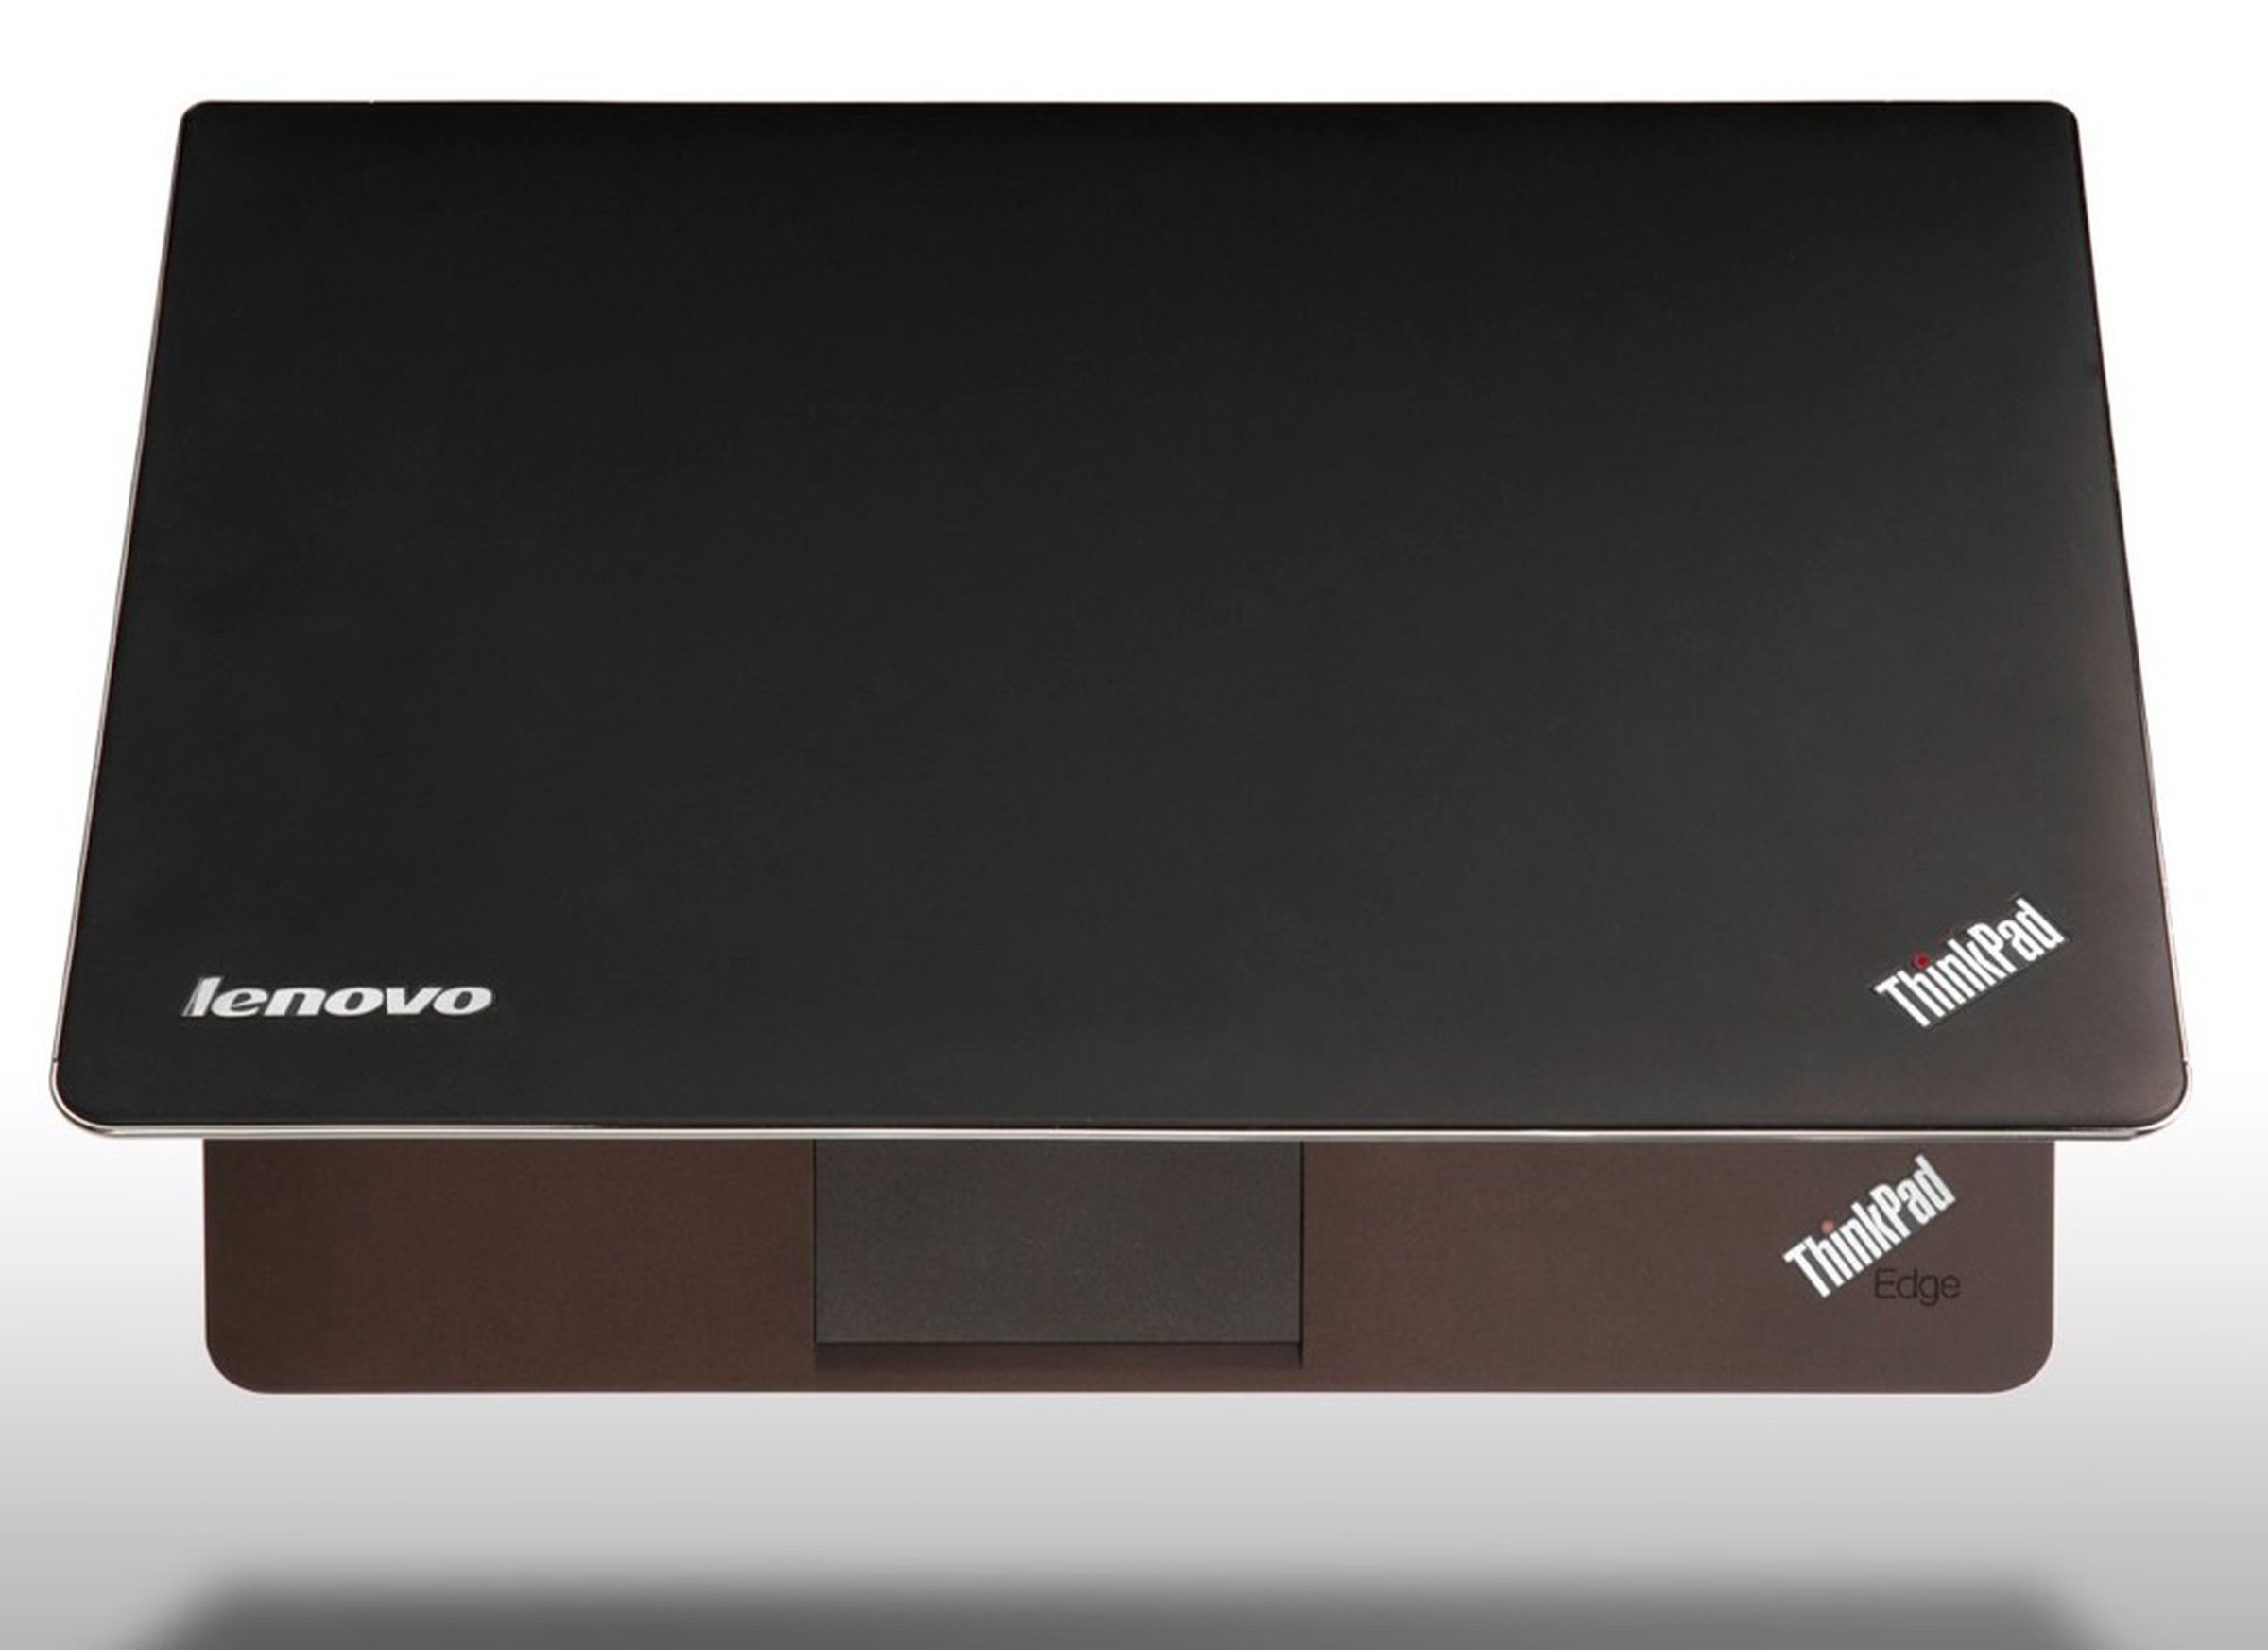 Lenovo ThinkPad Edge S430 press photos